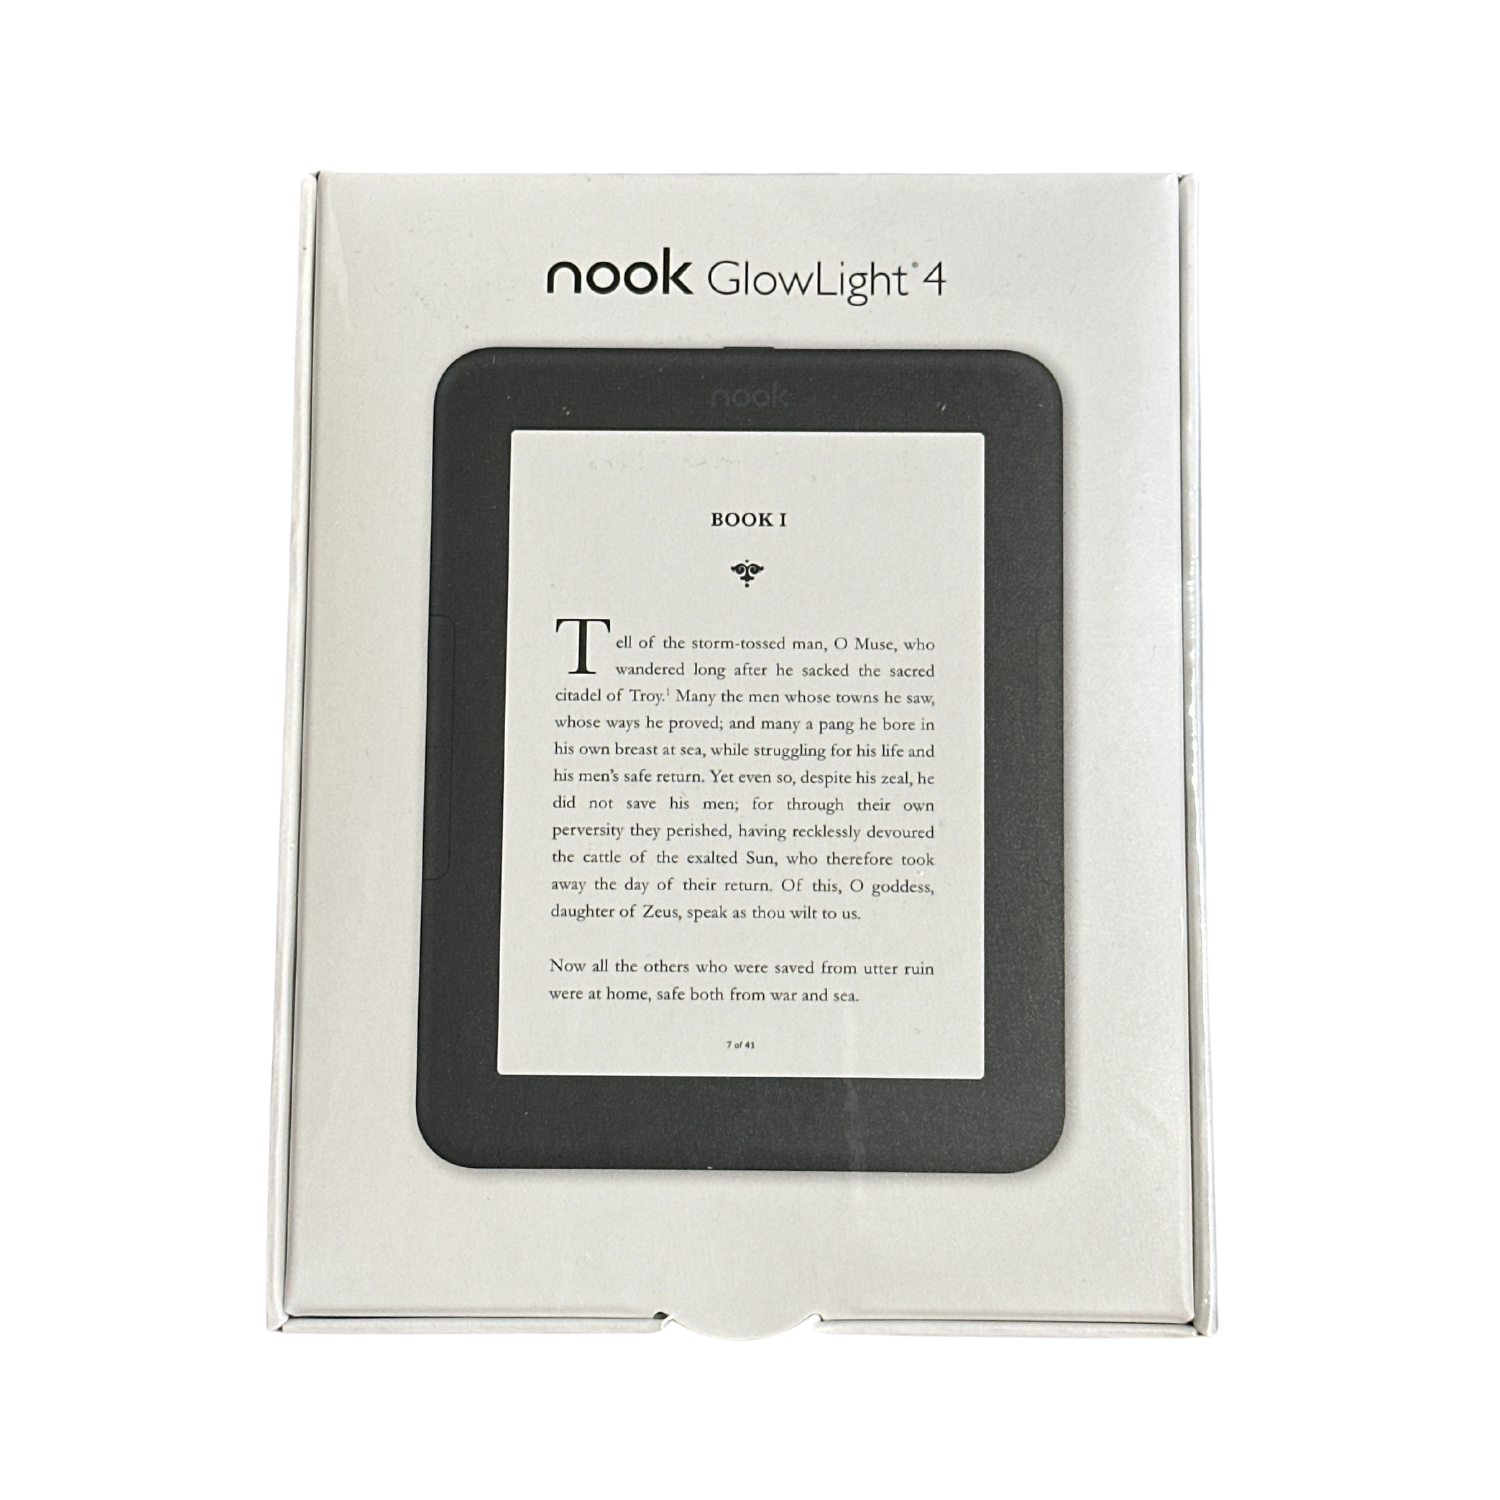 Barnes & Noble NOOK Glowlight 4 eReader | 6" Touchscreen | 32GB | Black | BNRV1100 (Like New, Open Box)